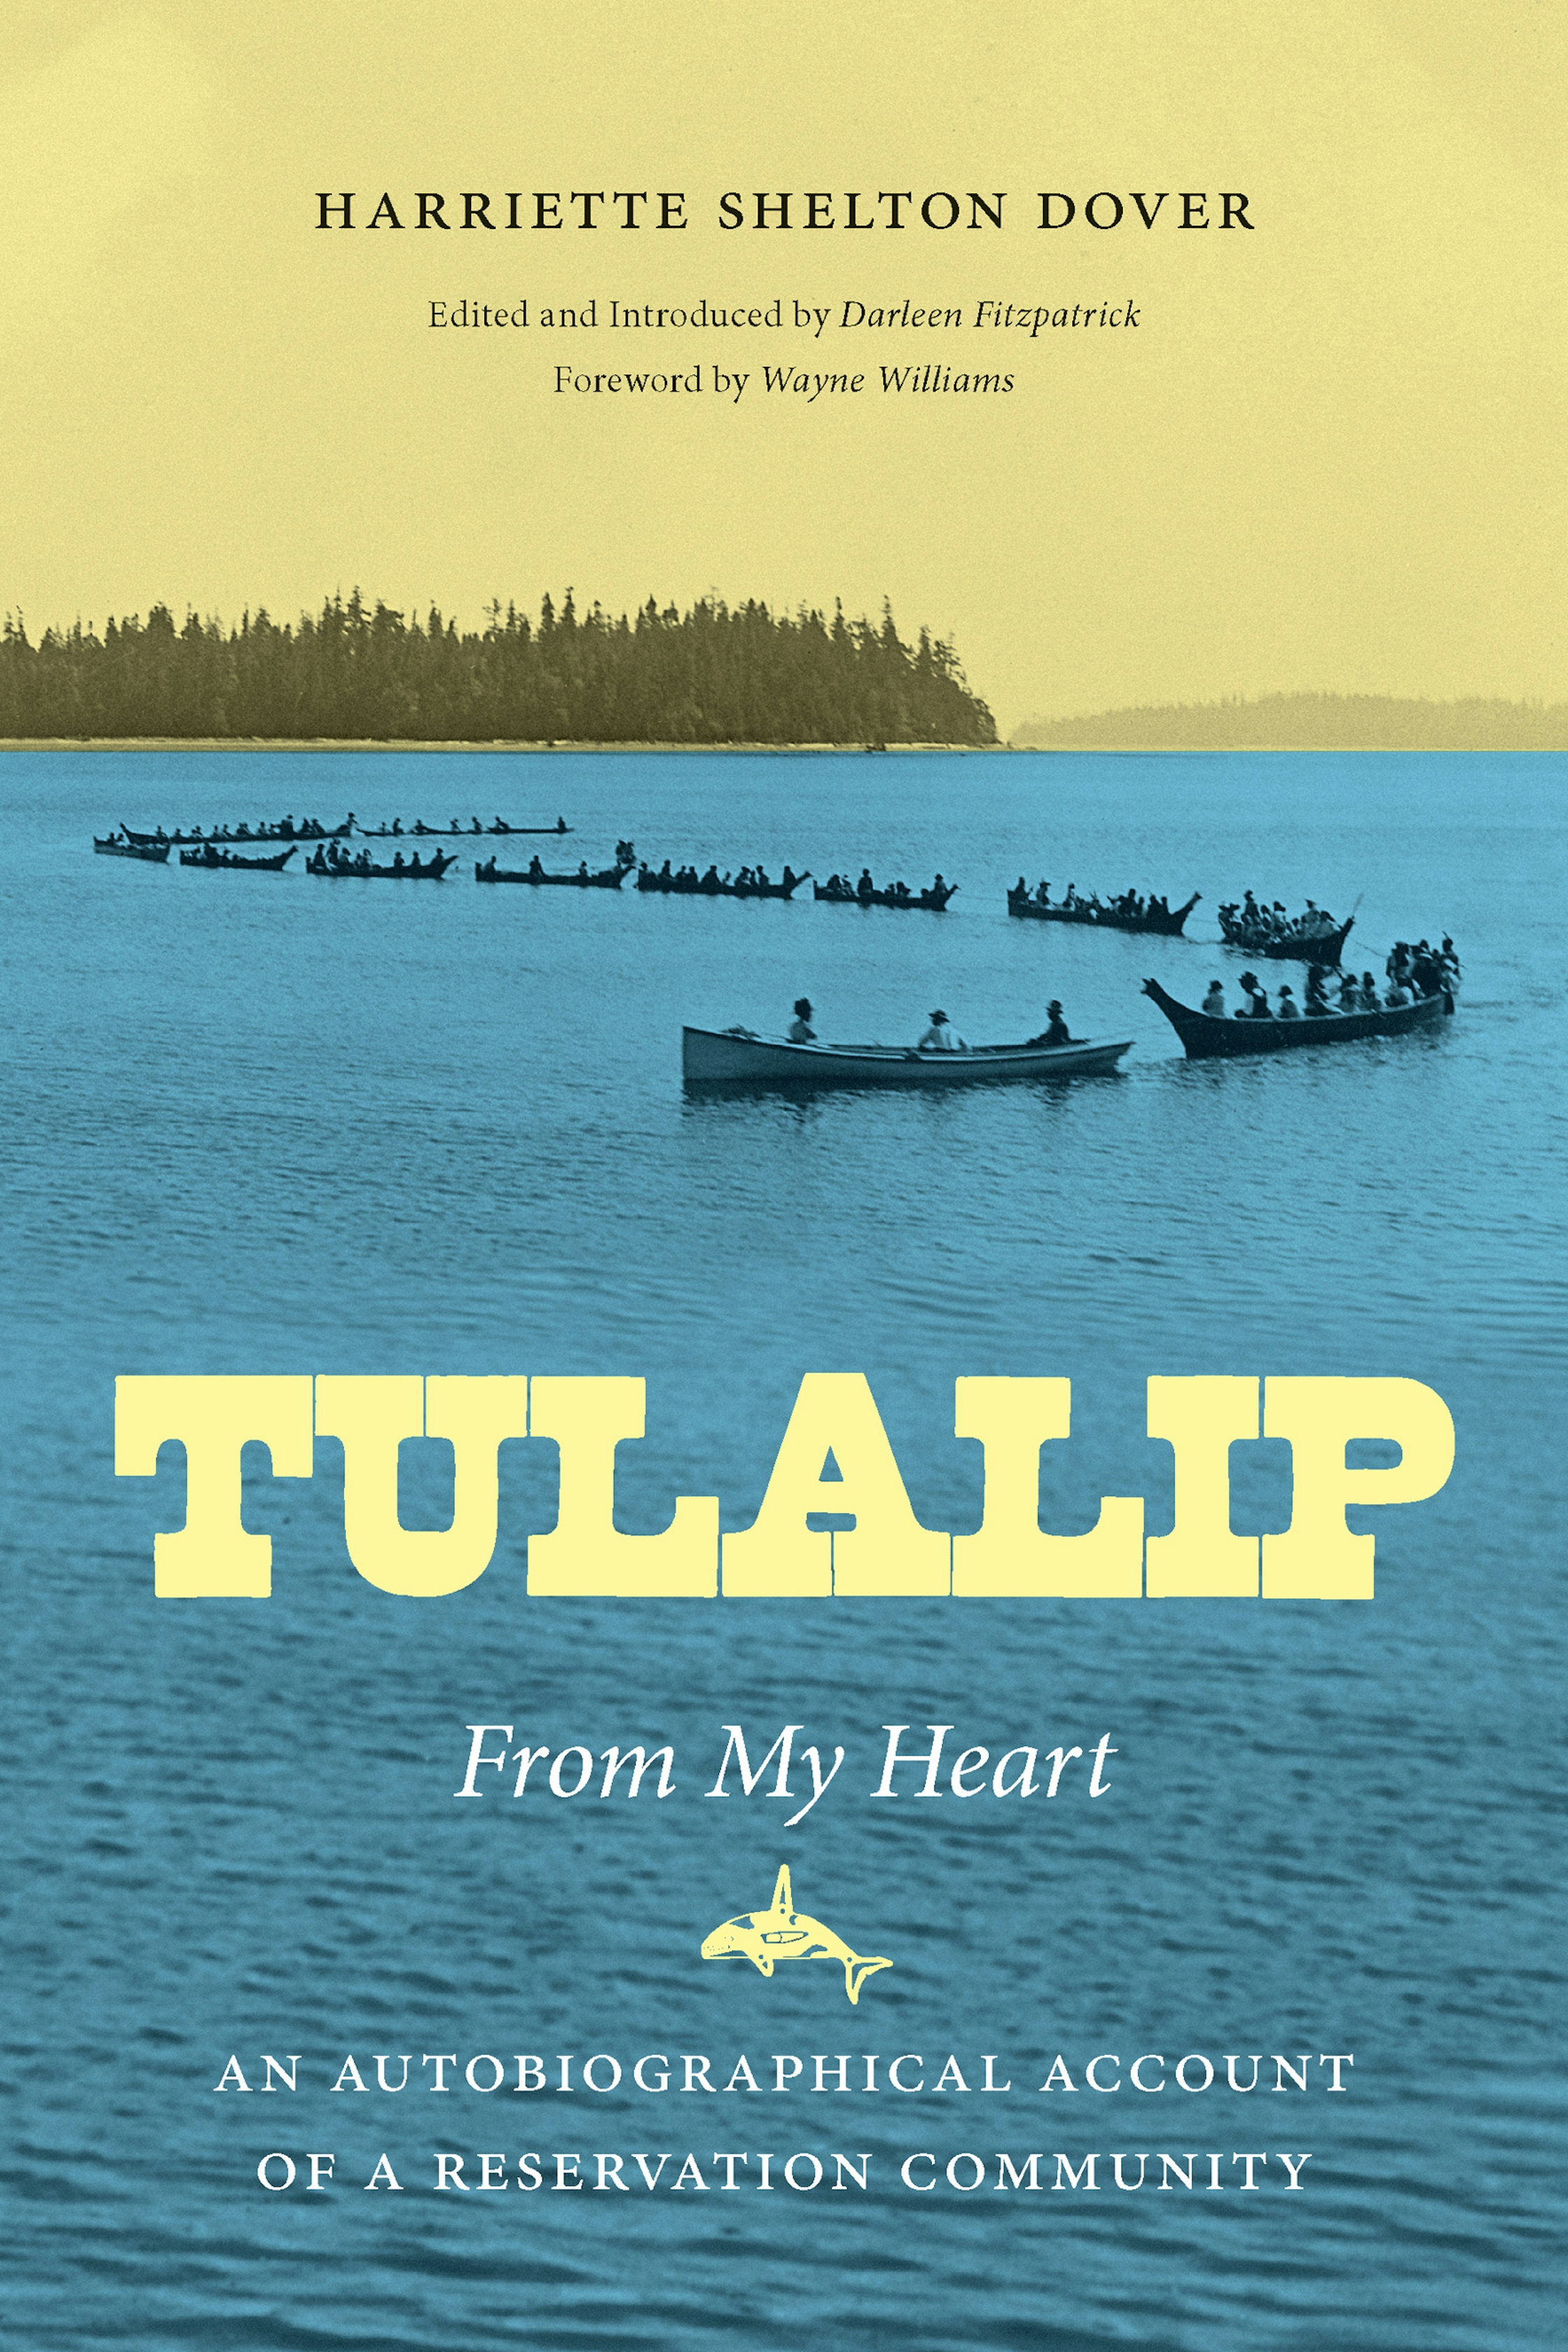 Tulalip, From My Heart